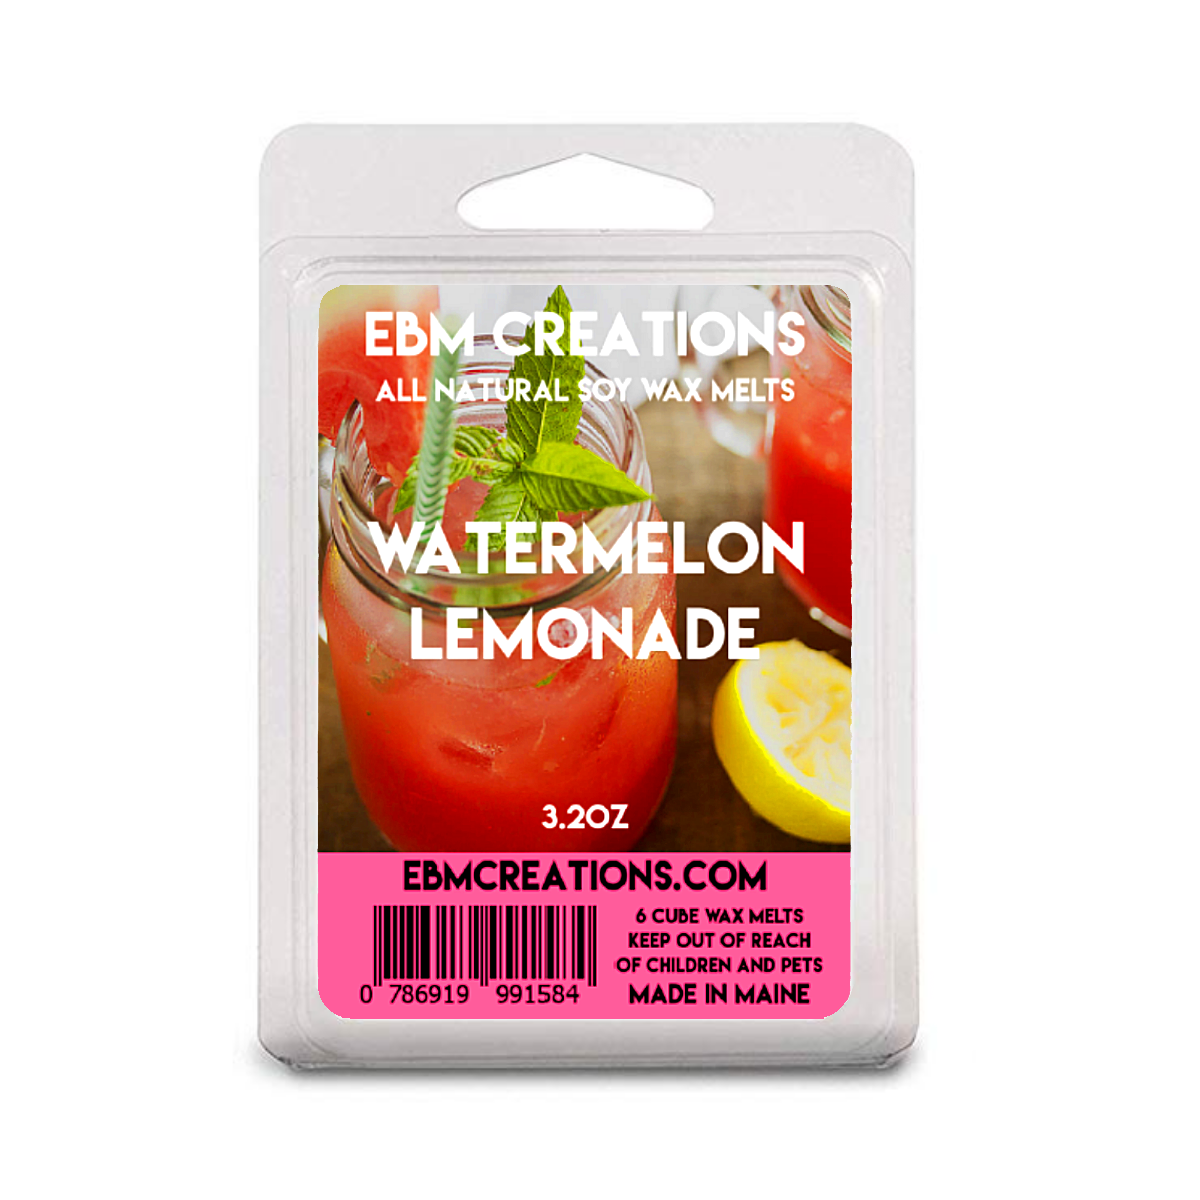 Watermelon Lemonade - 3.2 oz Clamshell